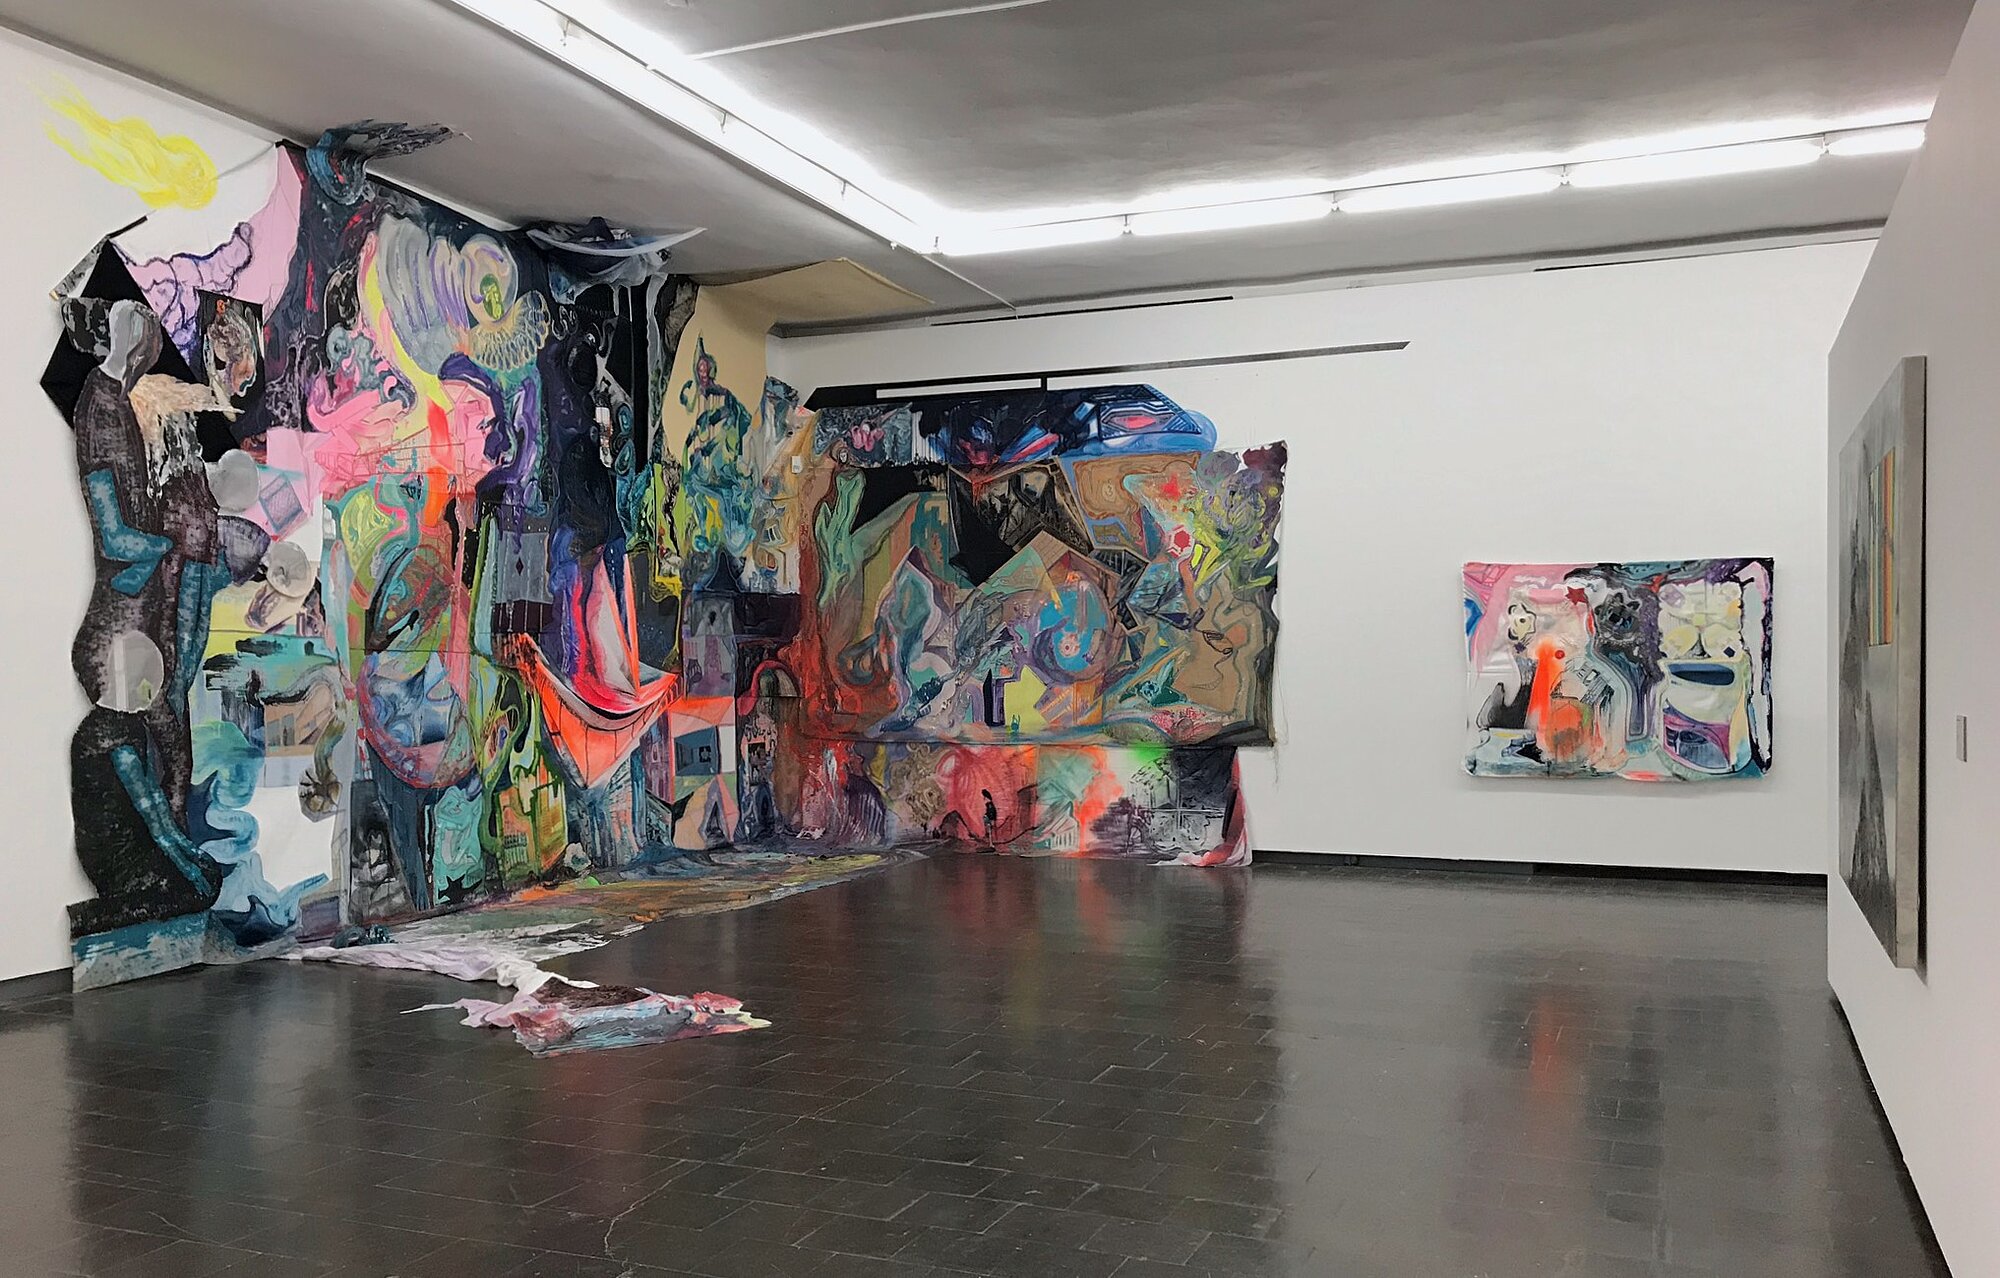 Ugur Ulusoy, Ausstellungsansicht Kunstpreis "junger westen" 2019